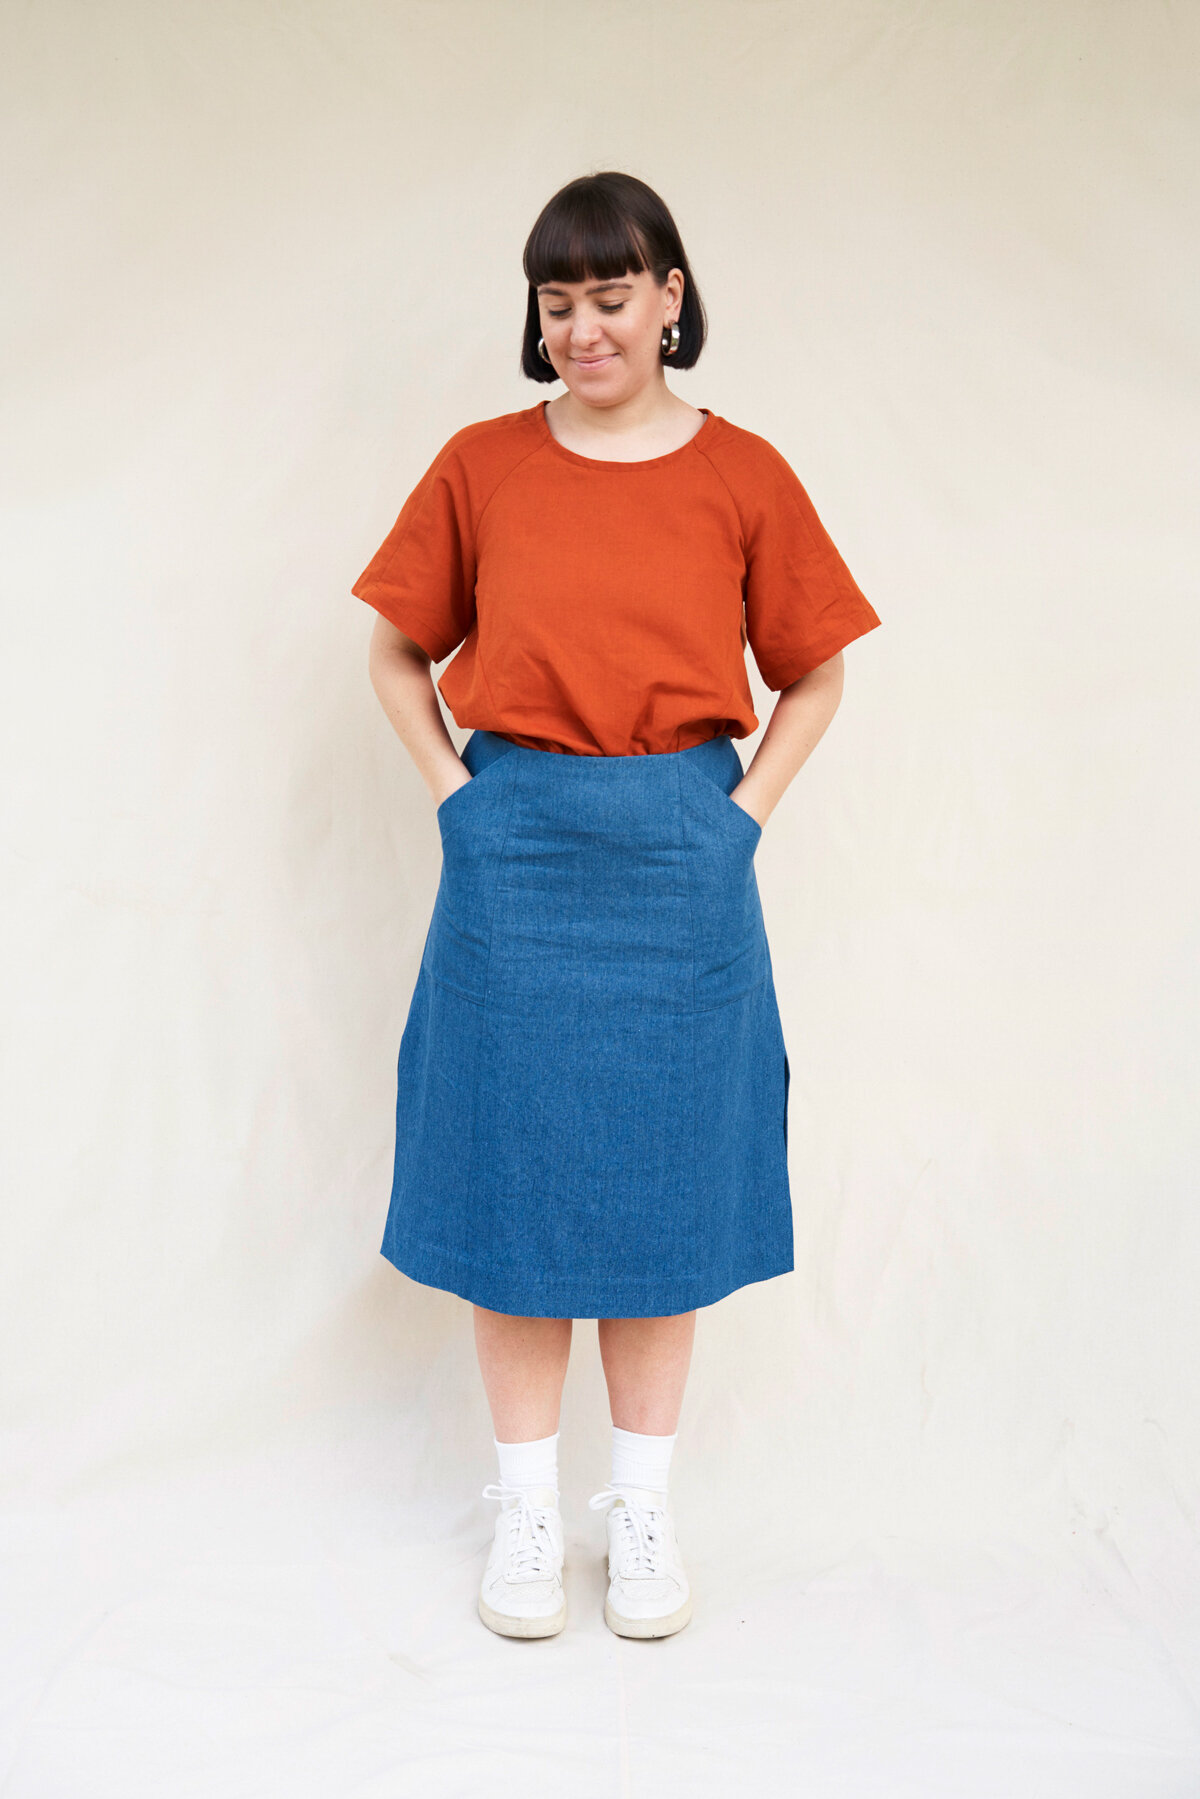 Barkly skirt sewing pattern